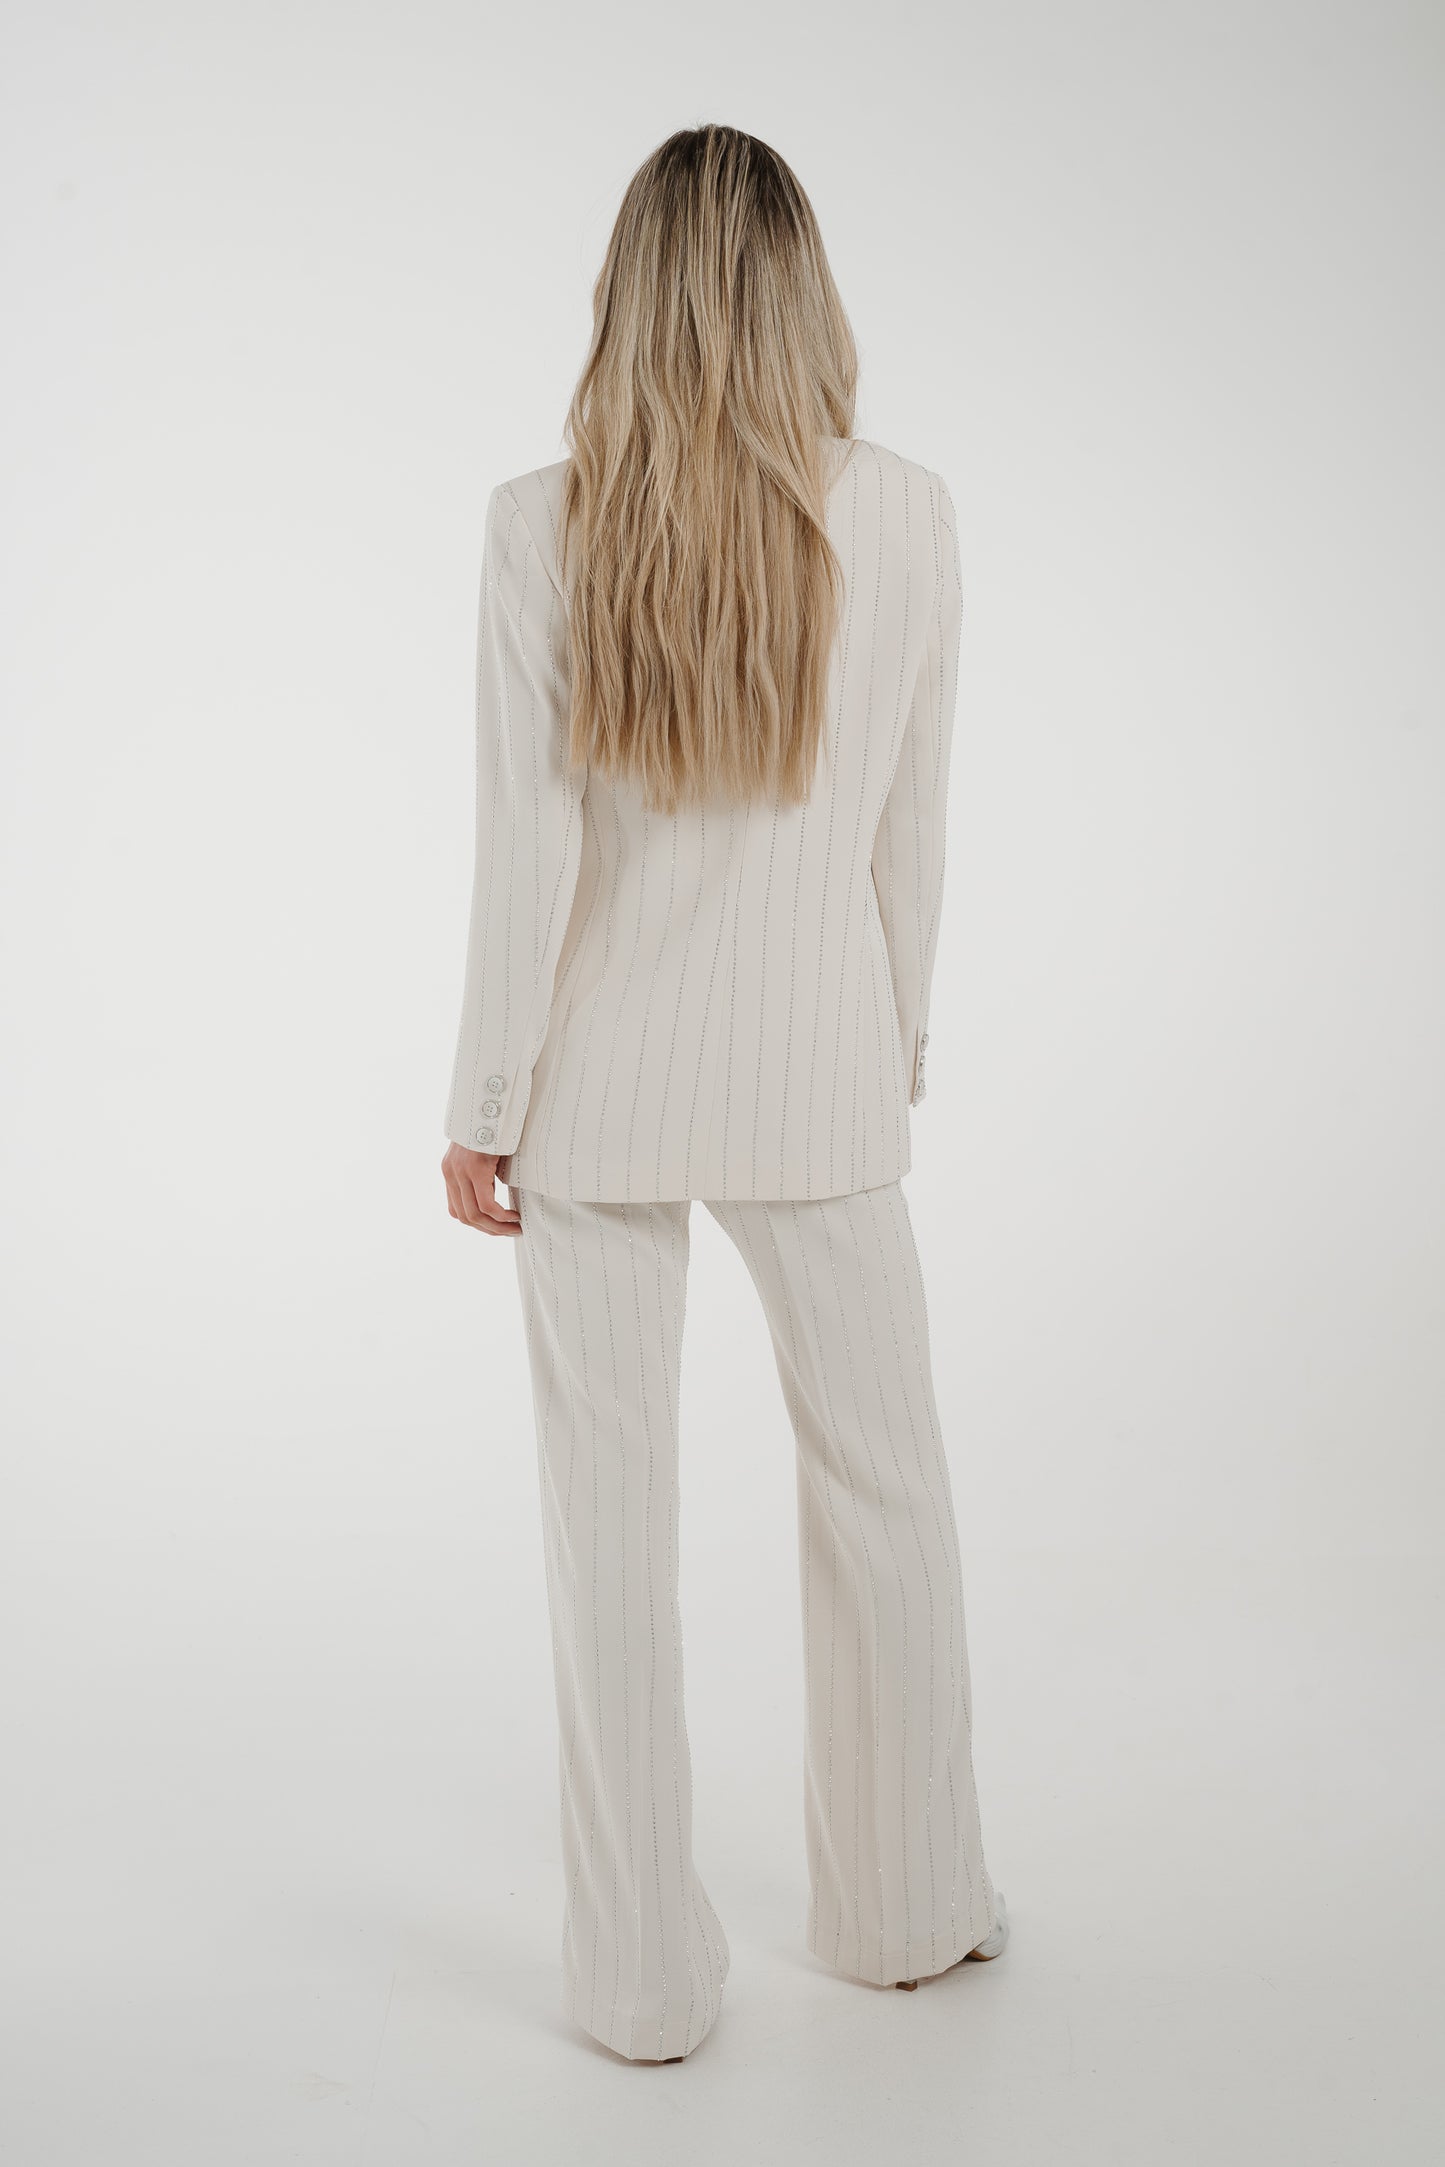 Alana Sparkle Pinstripe Suit In Cream